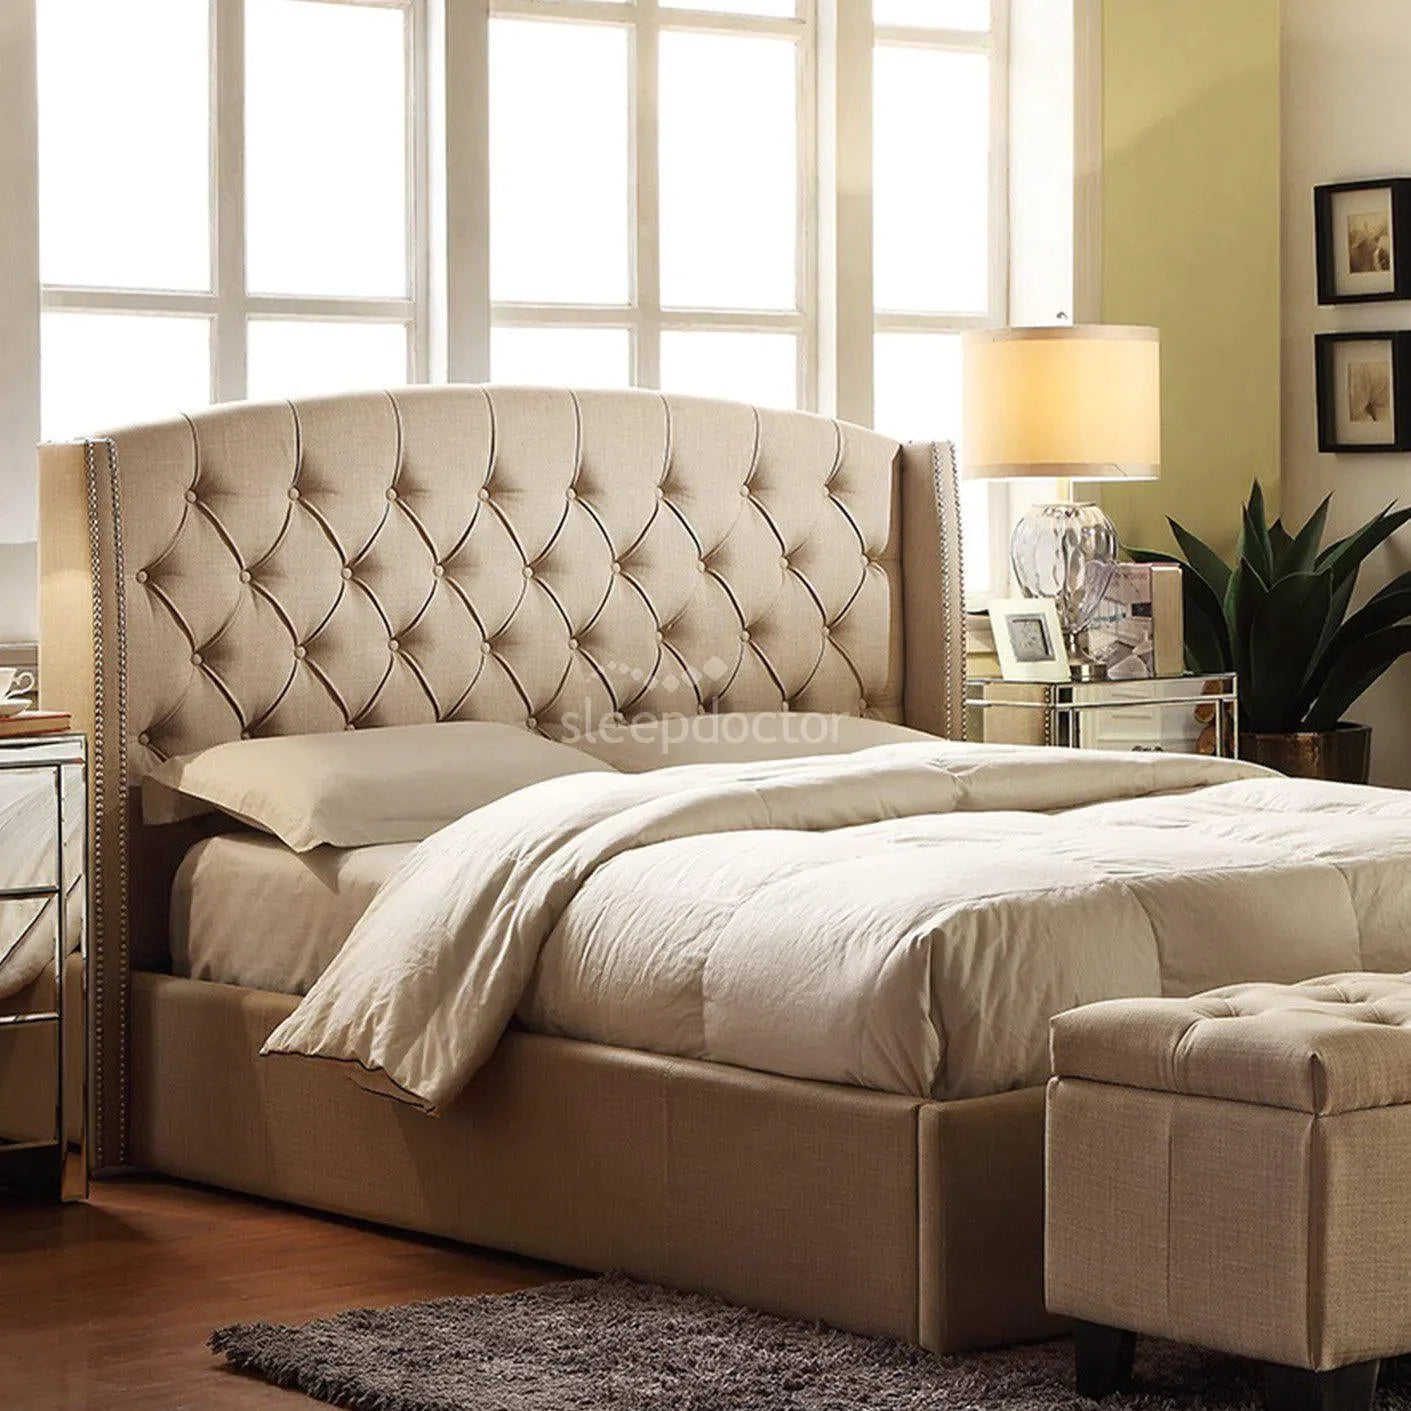 Hampton Fabric Bed Frame Bed with Timber Slats-Sleep Doctor